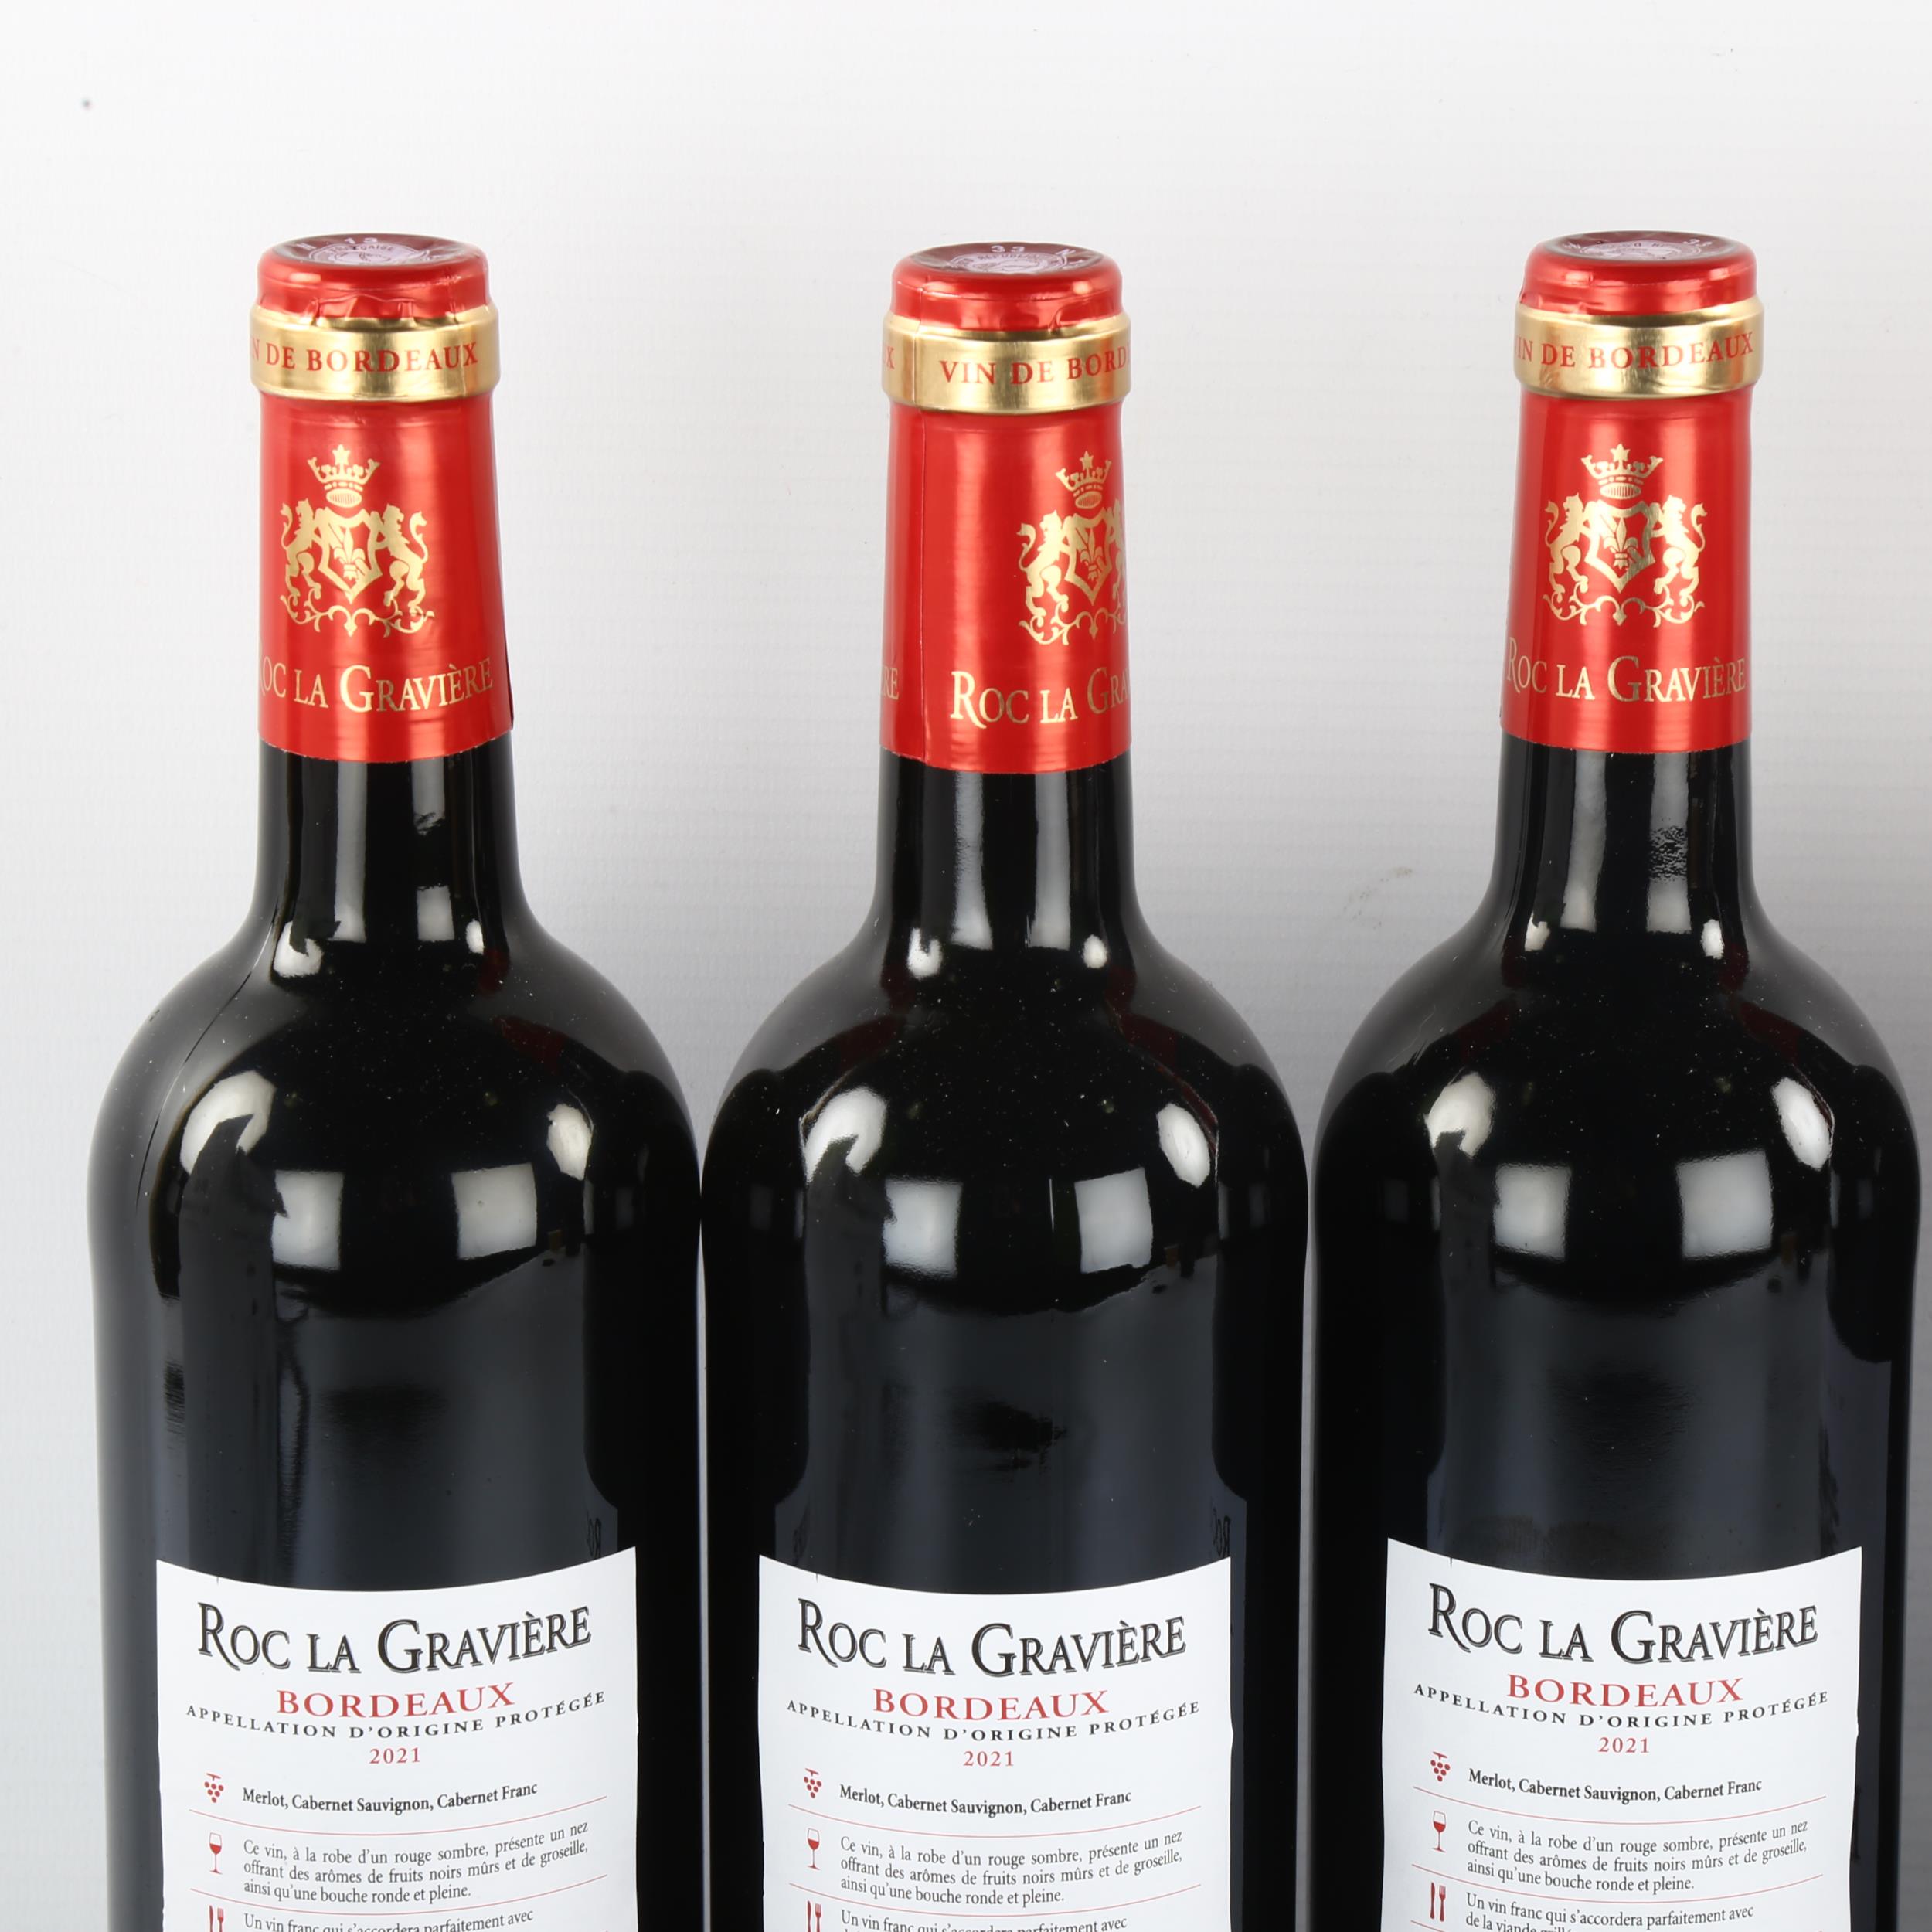 6 bottles of red Bordeaux wine, Roc La Graviere 2021 - Image 3 of 3